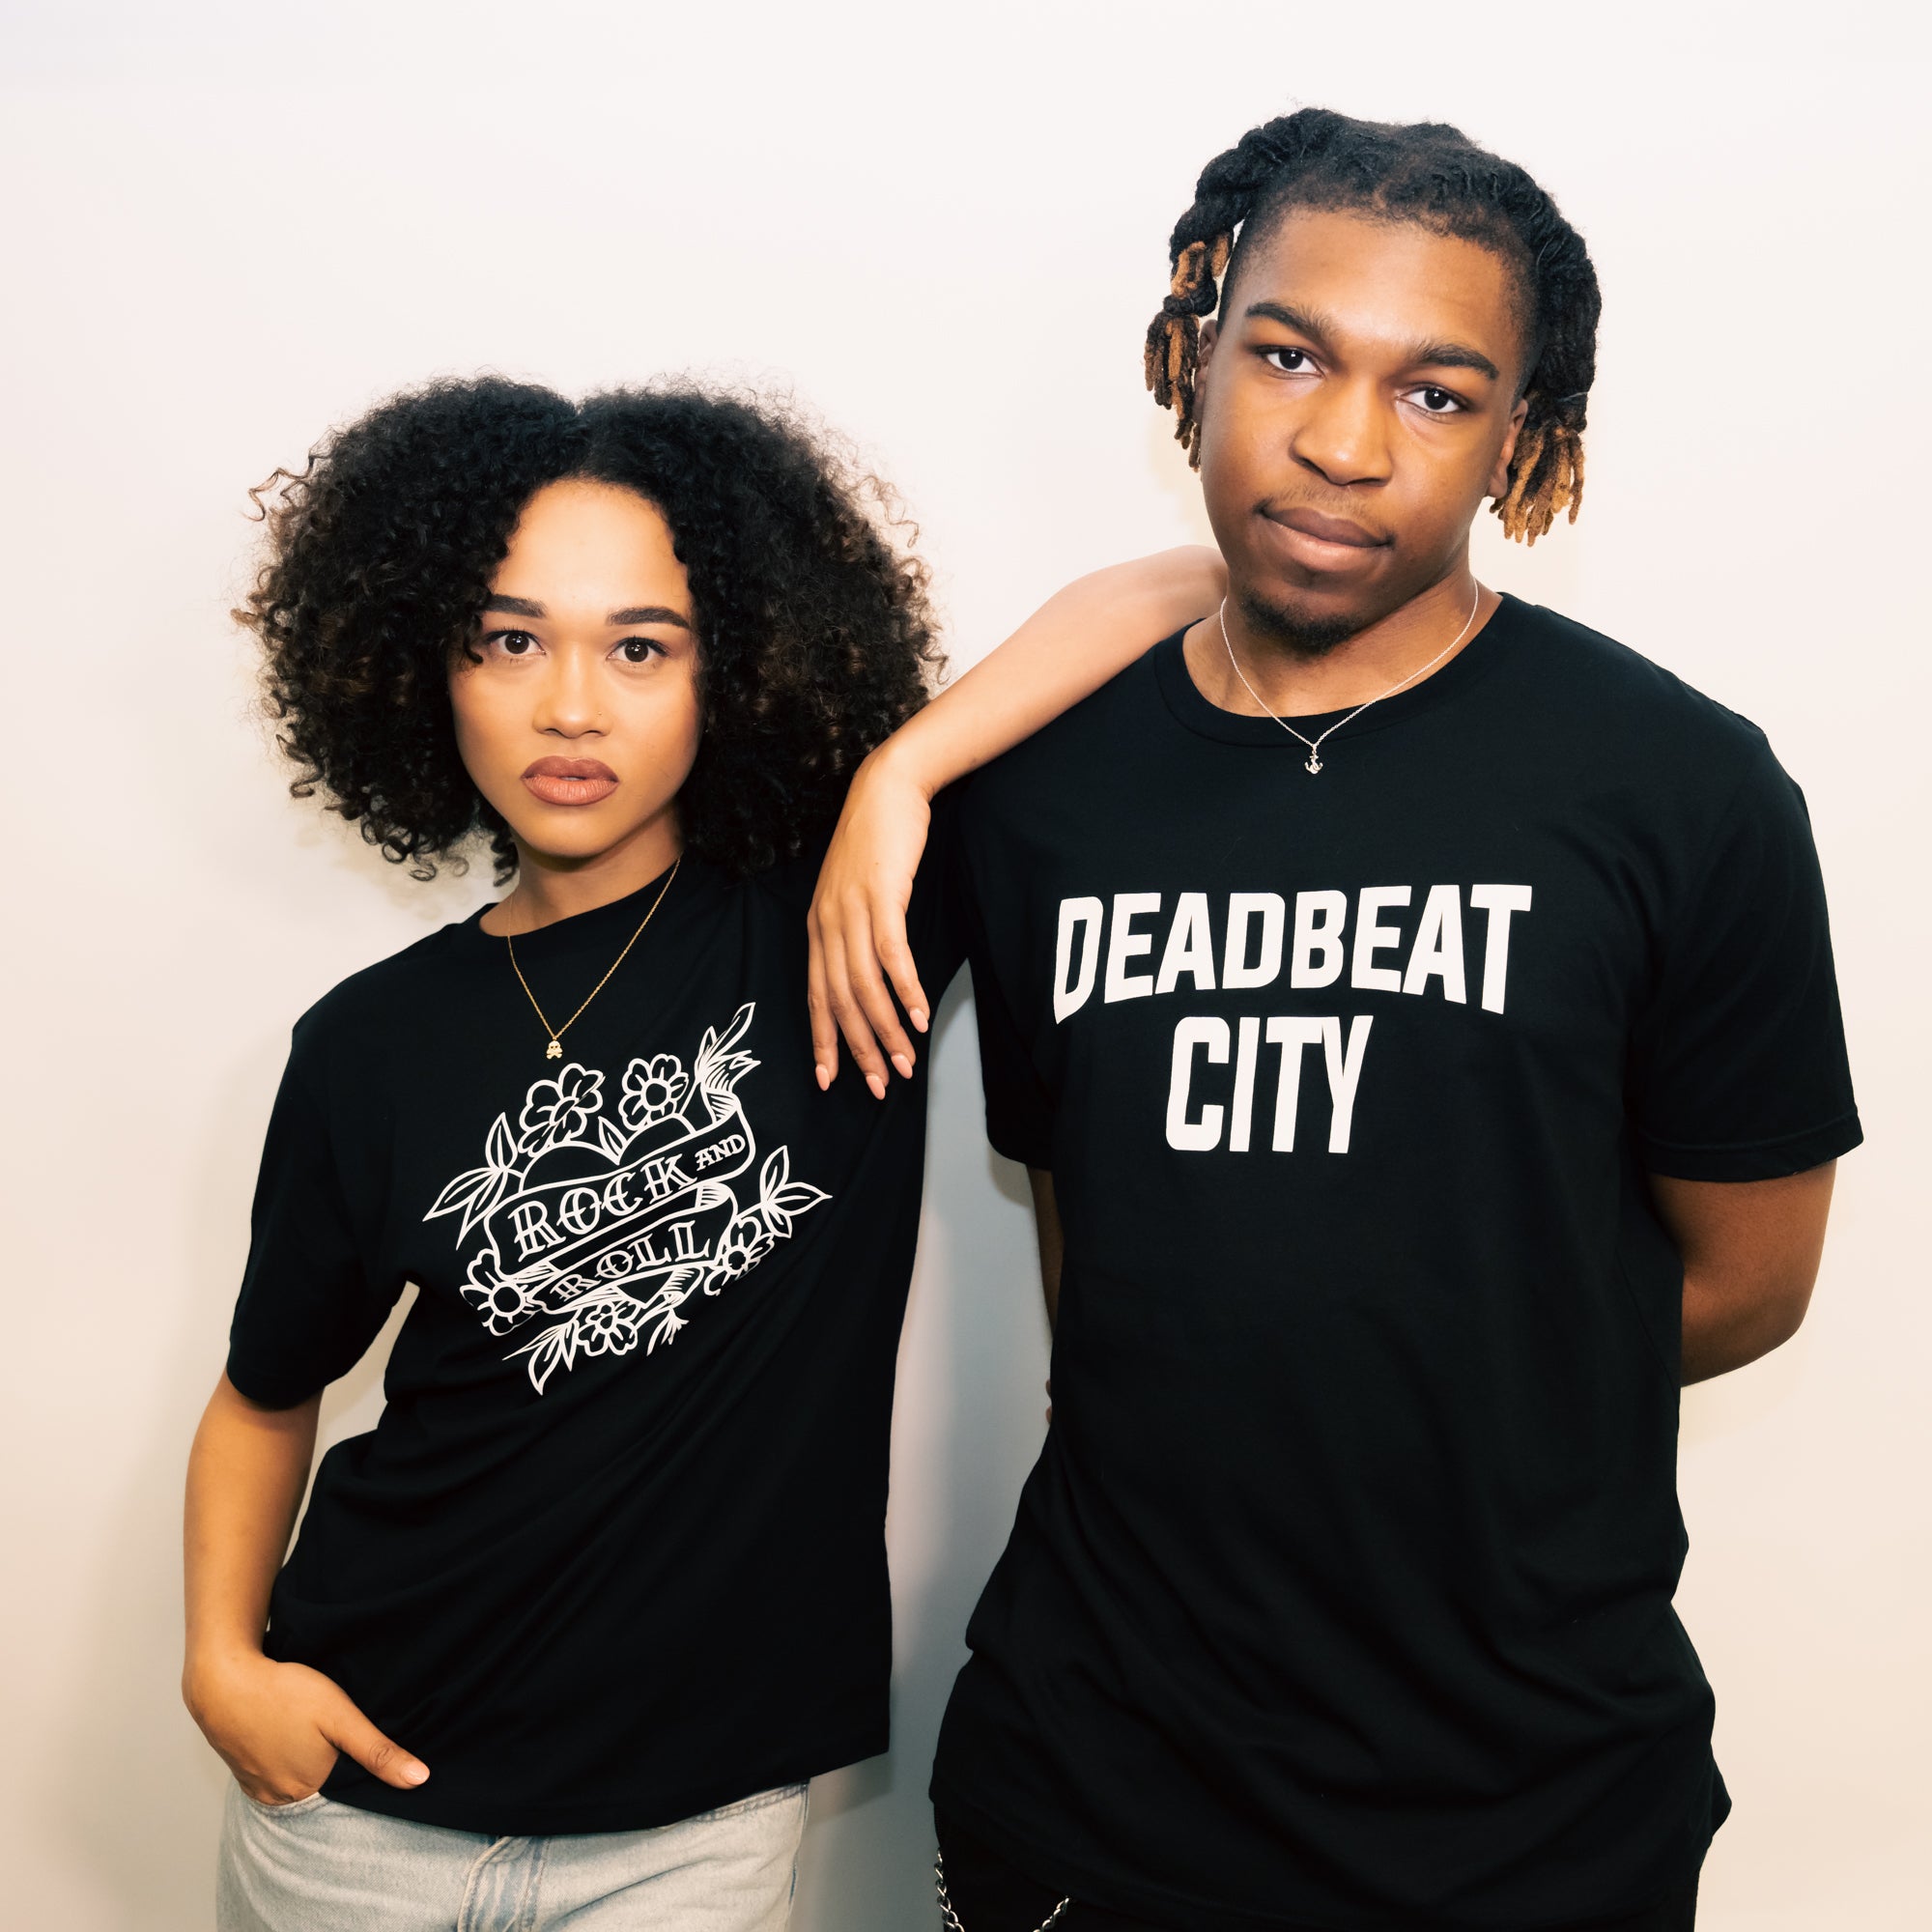 Rock and Roll Black Unisex T-Shirt by db deadbeat